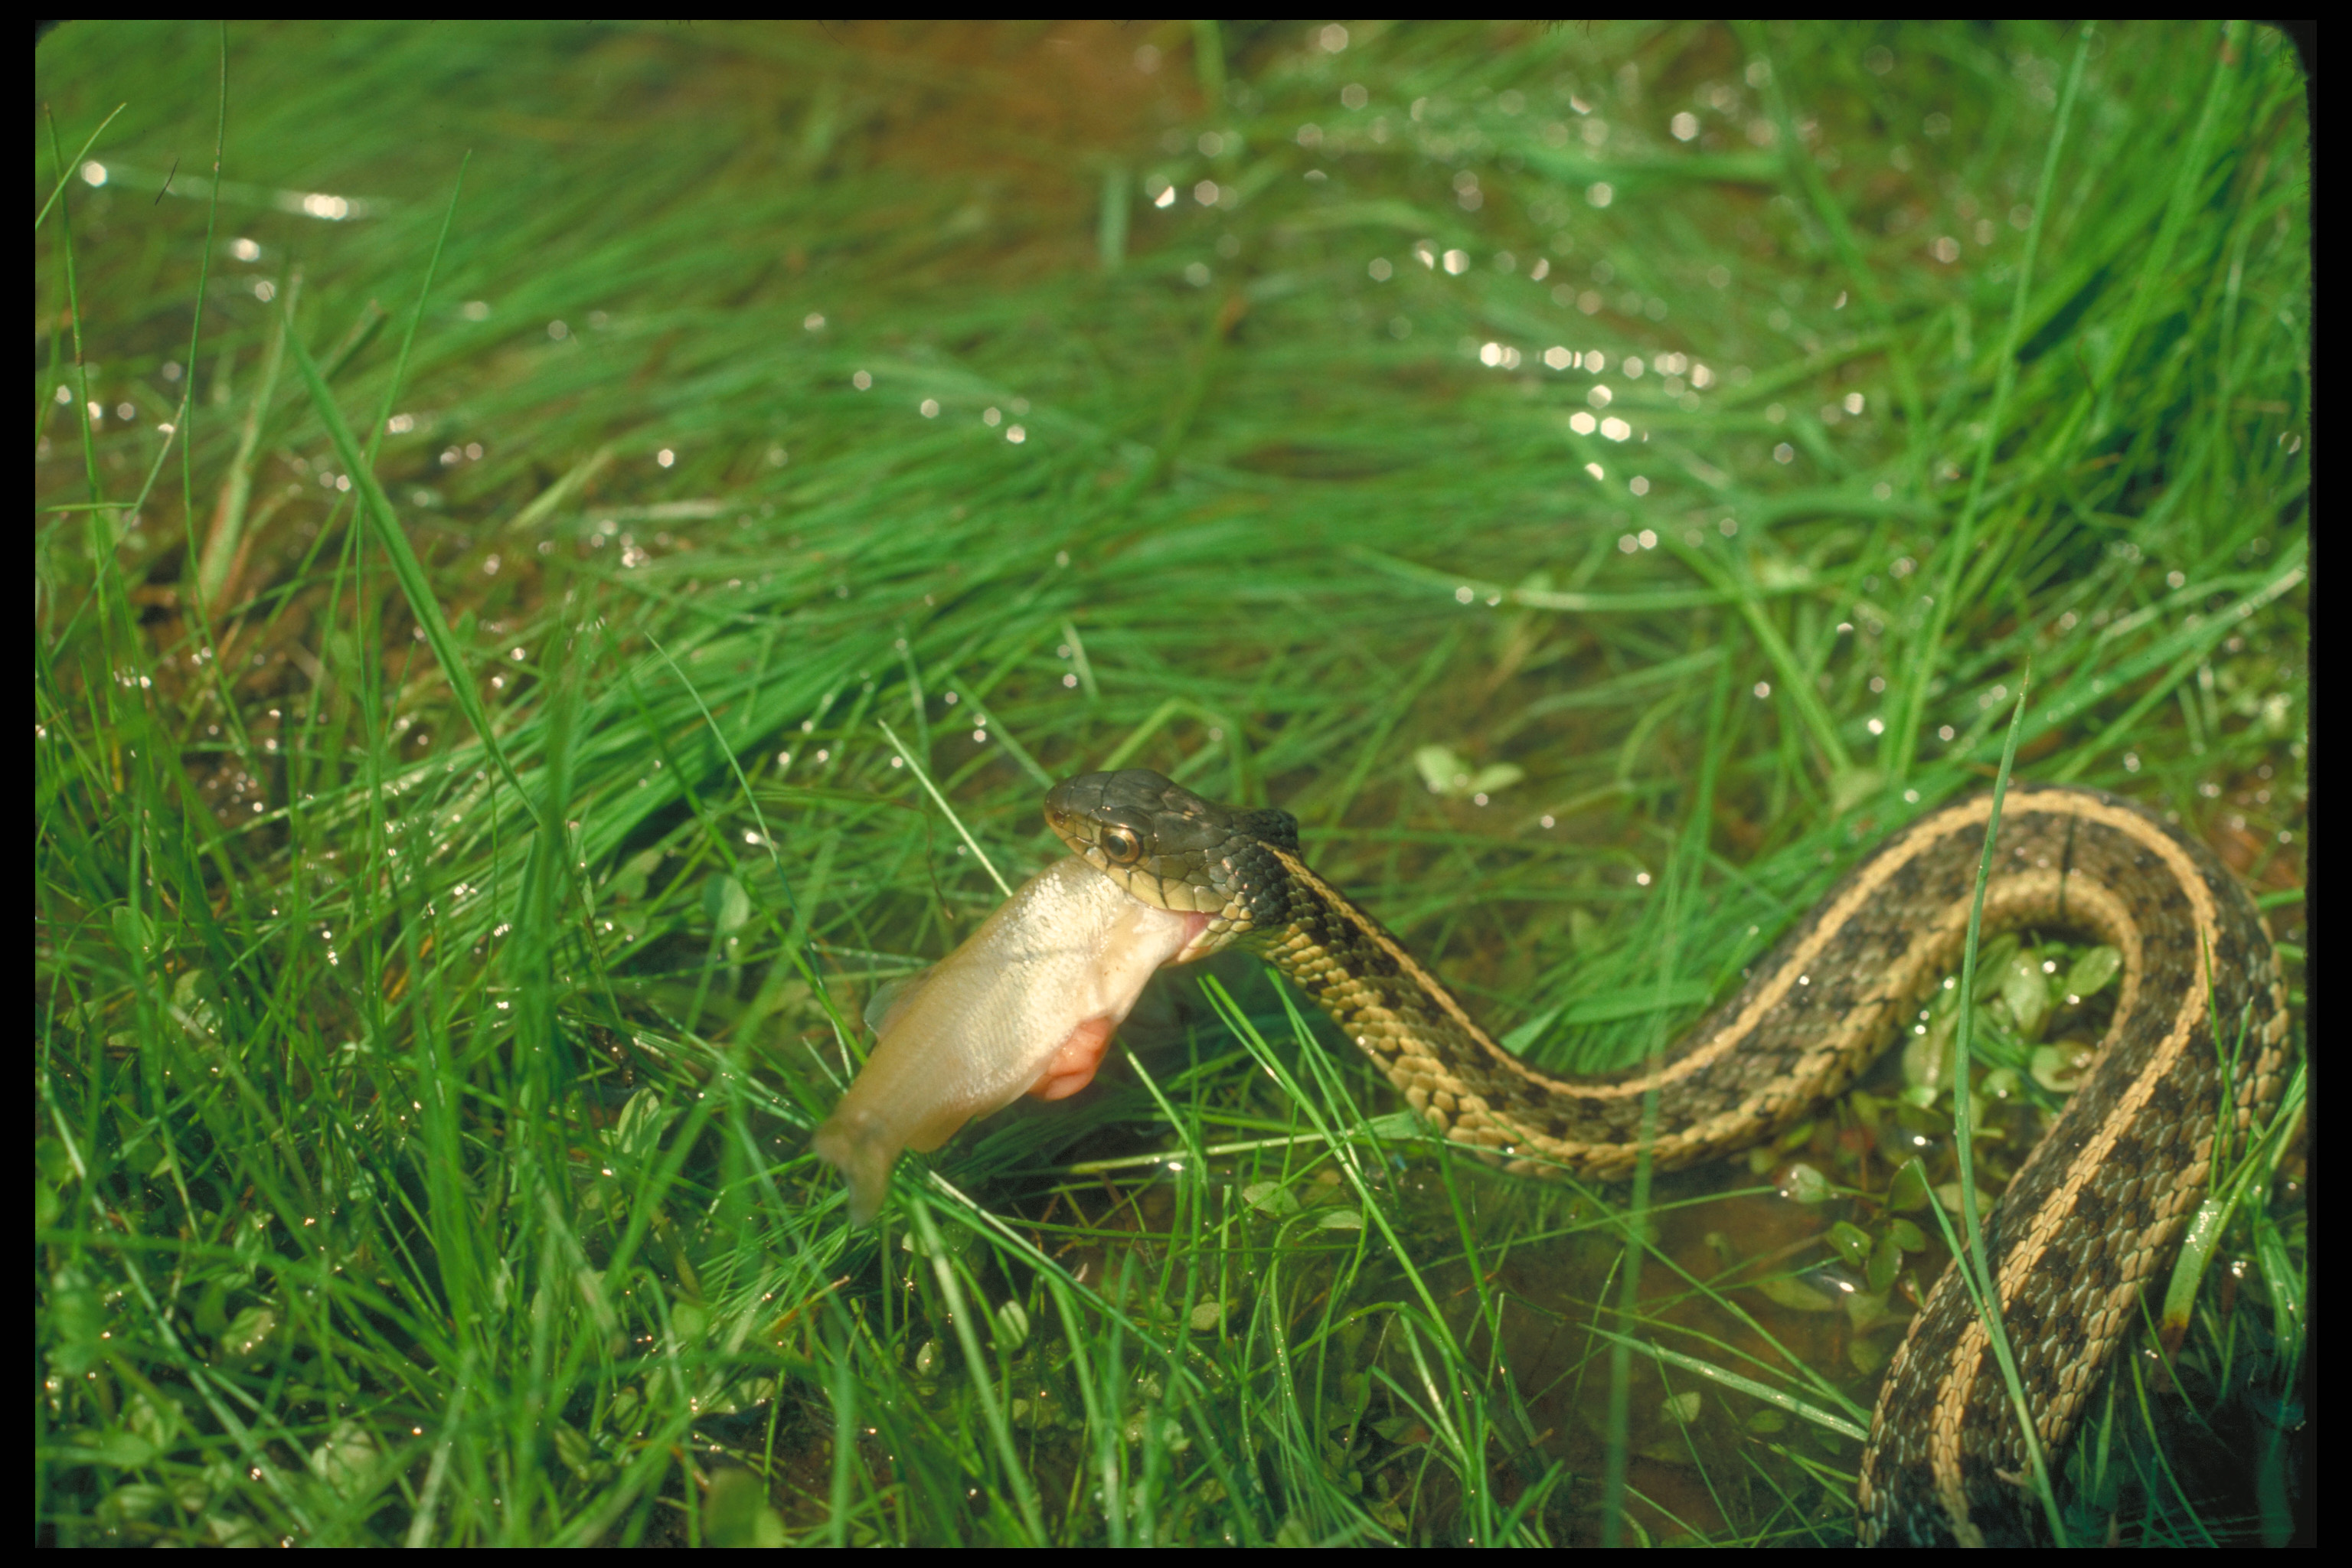 About Garter Snakes How Do Garter Snakes Hnadle Their Prey